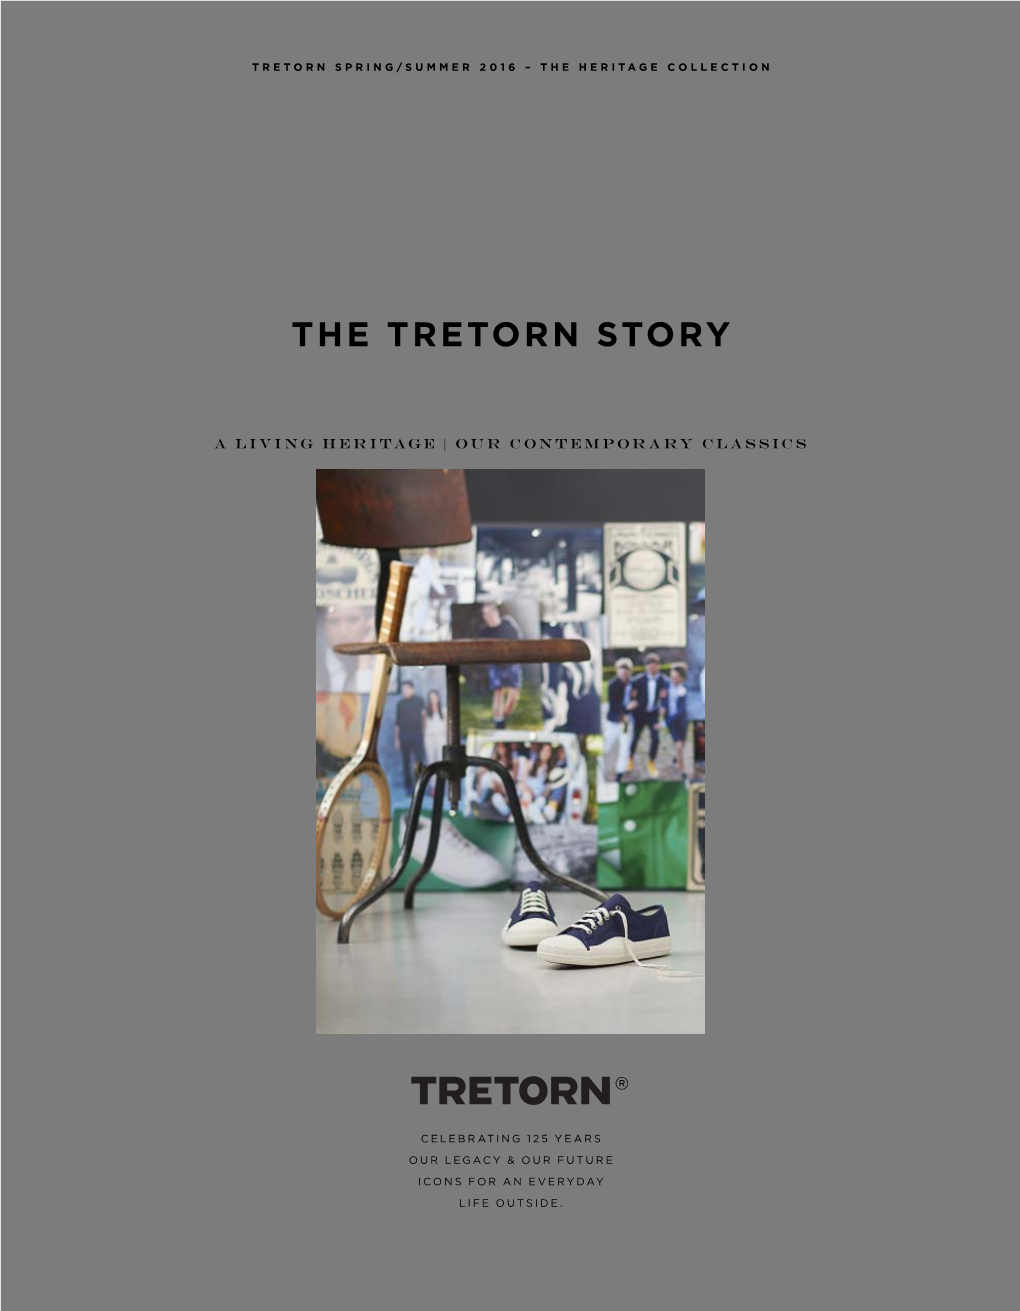 The Tretorn Story